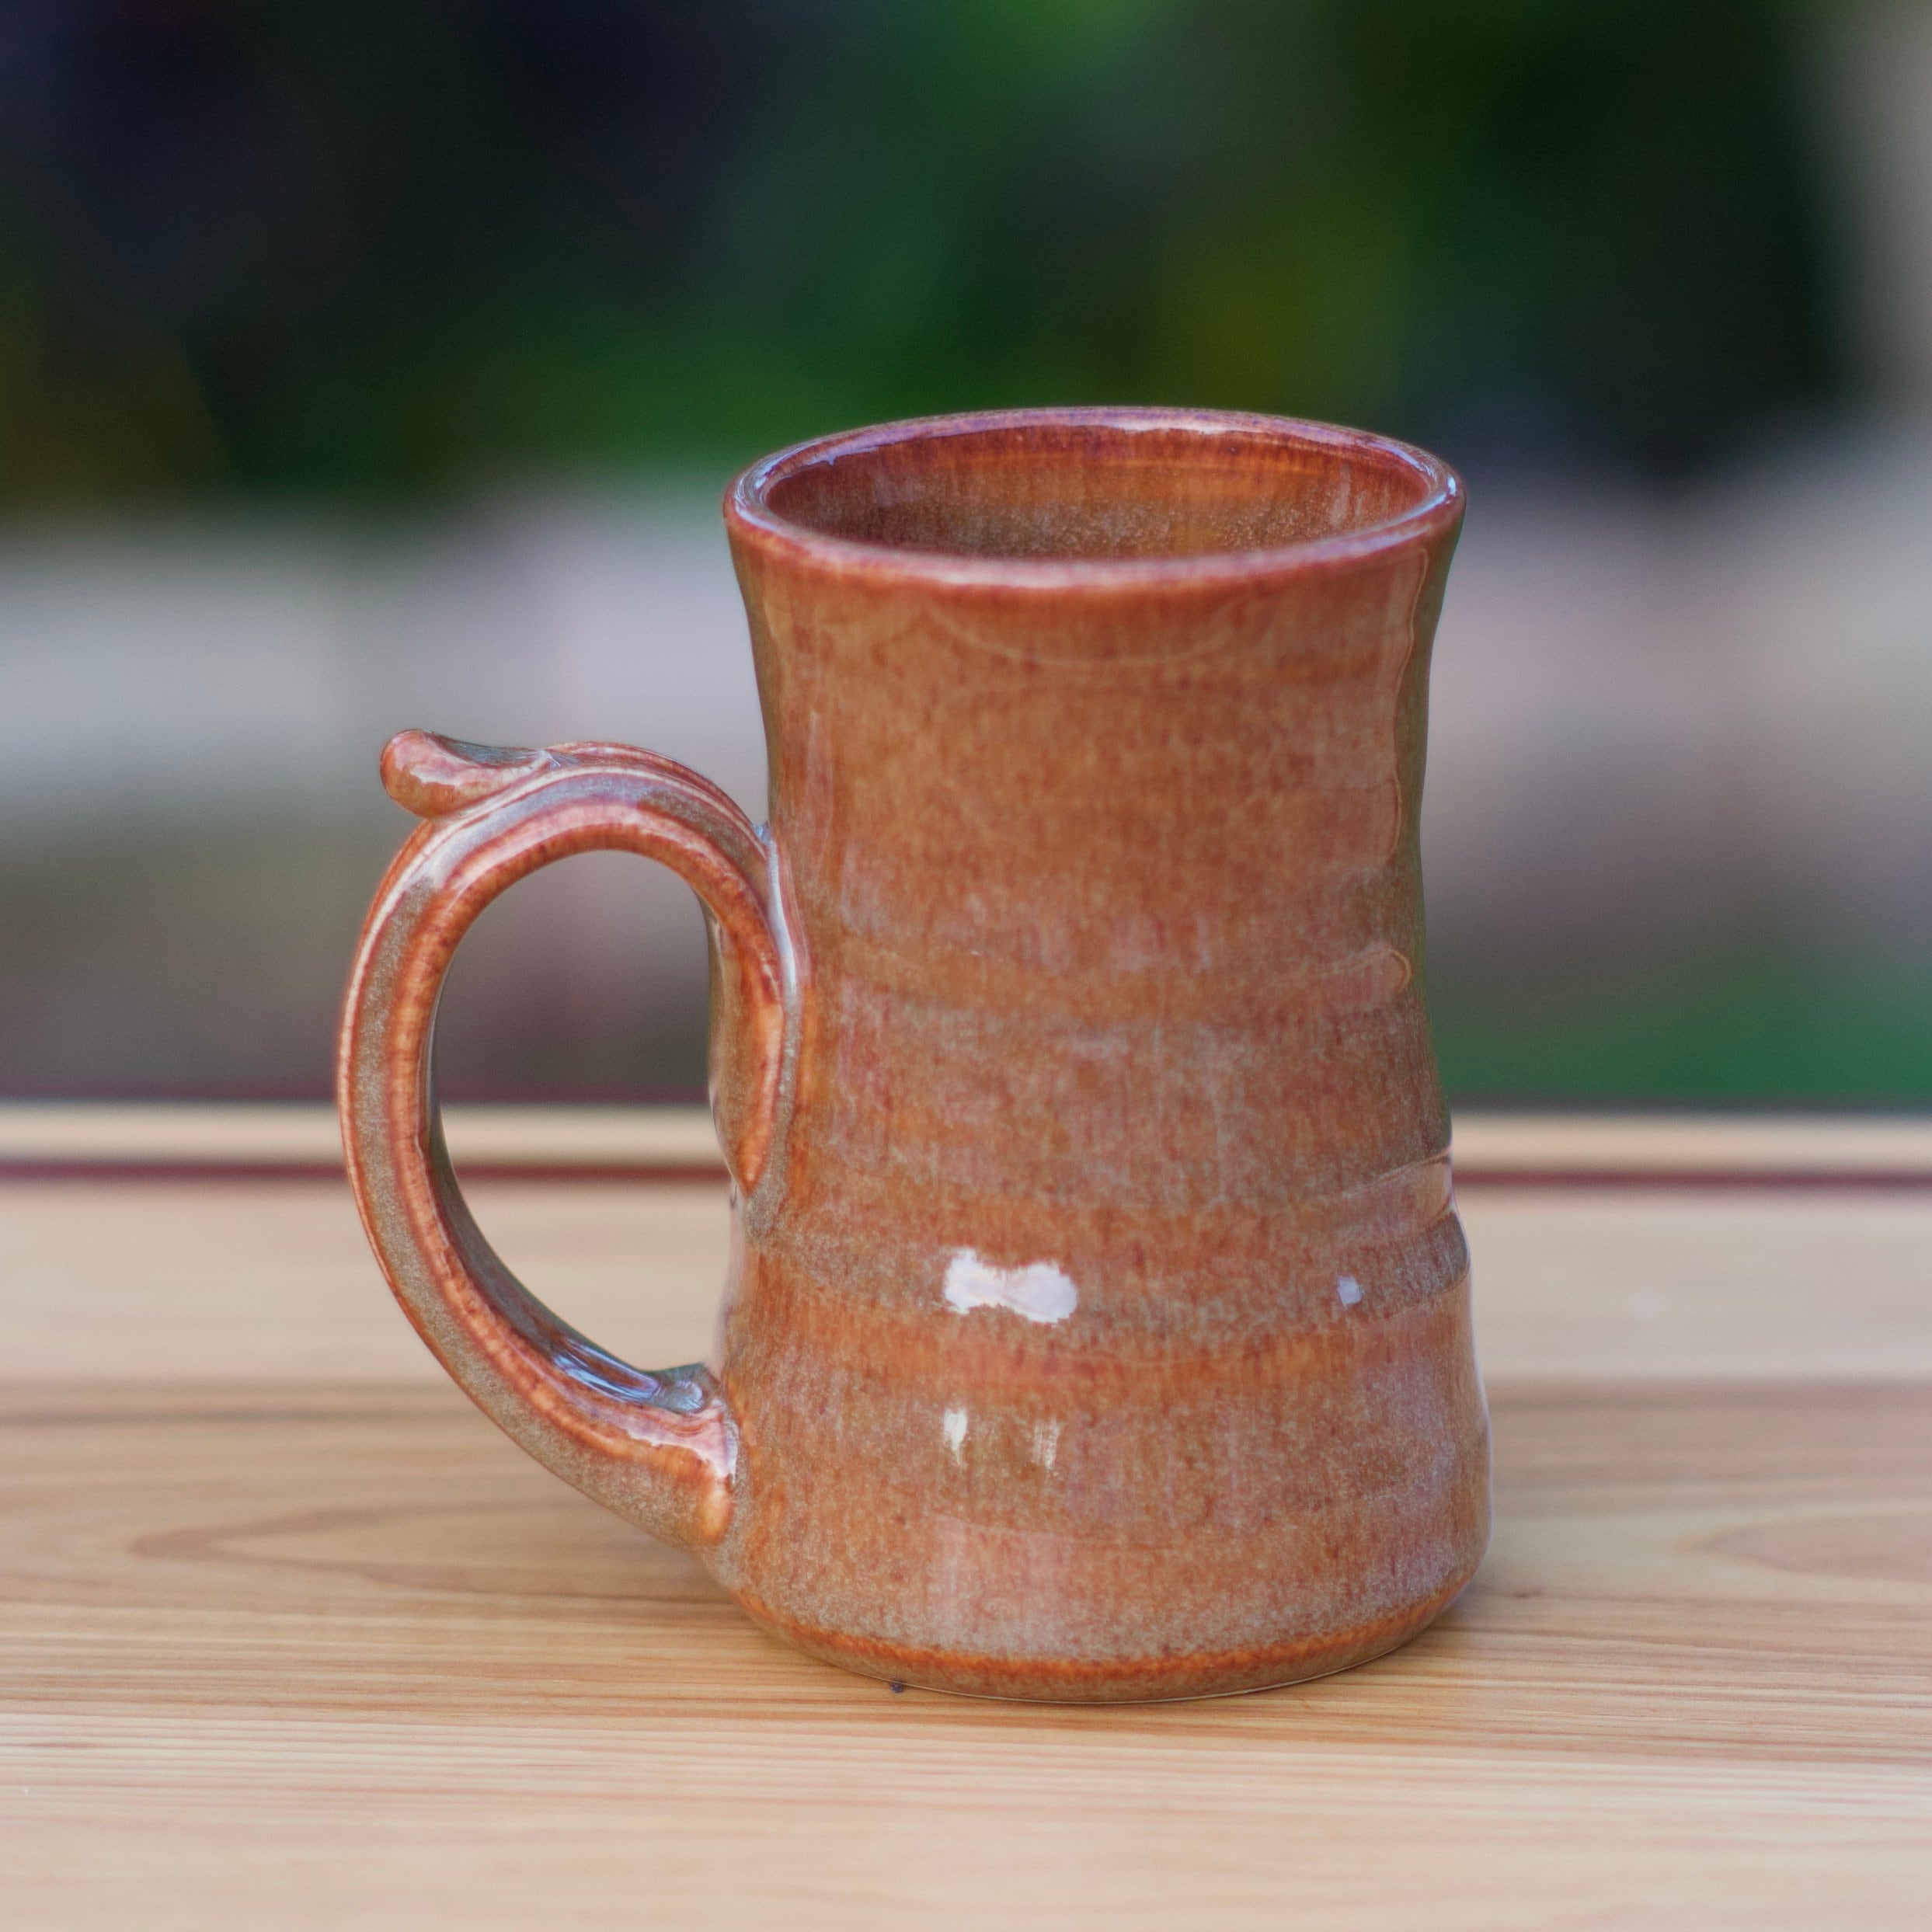 Pottery Coffee Mug in White wheelthrown 10-12 ounces**READY TO SHIP